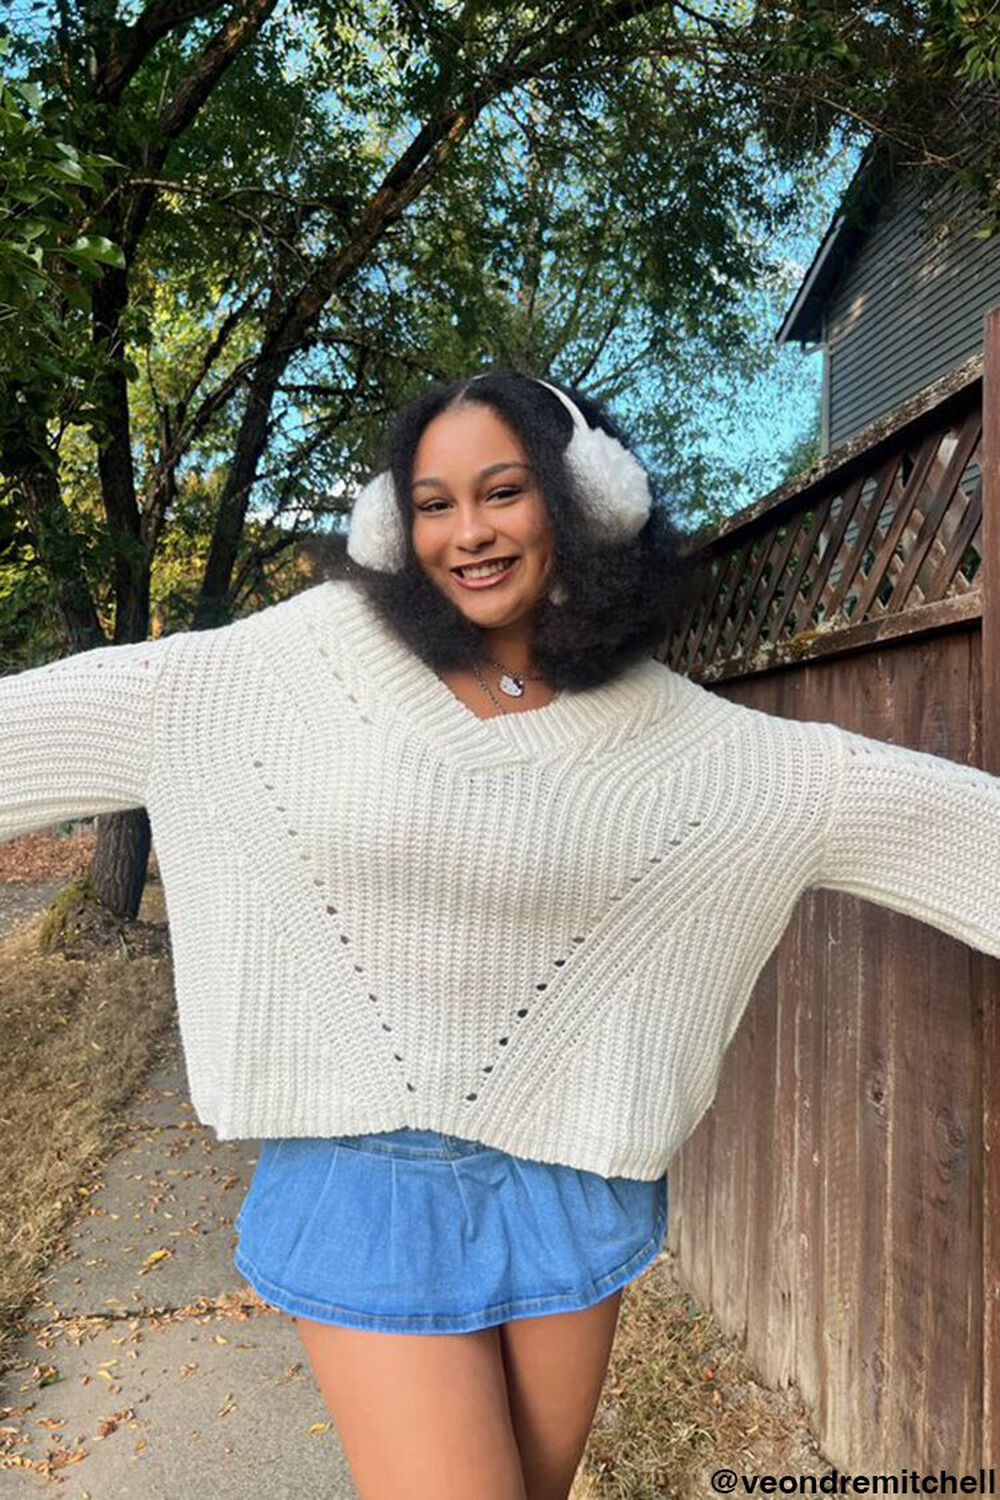 Oversized Chunky Knit Sweater